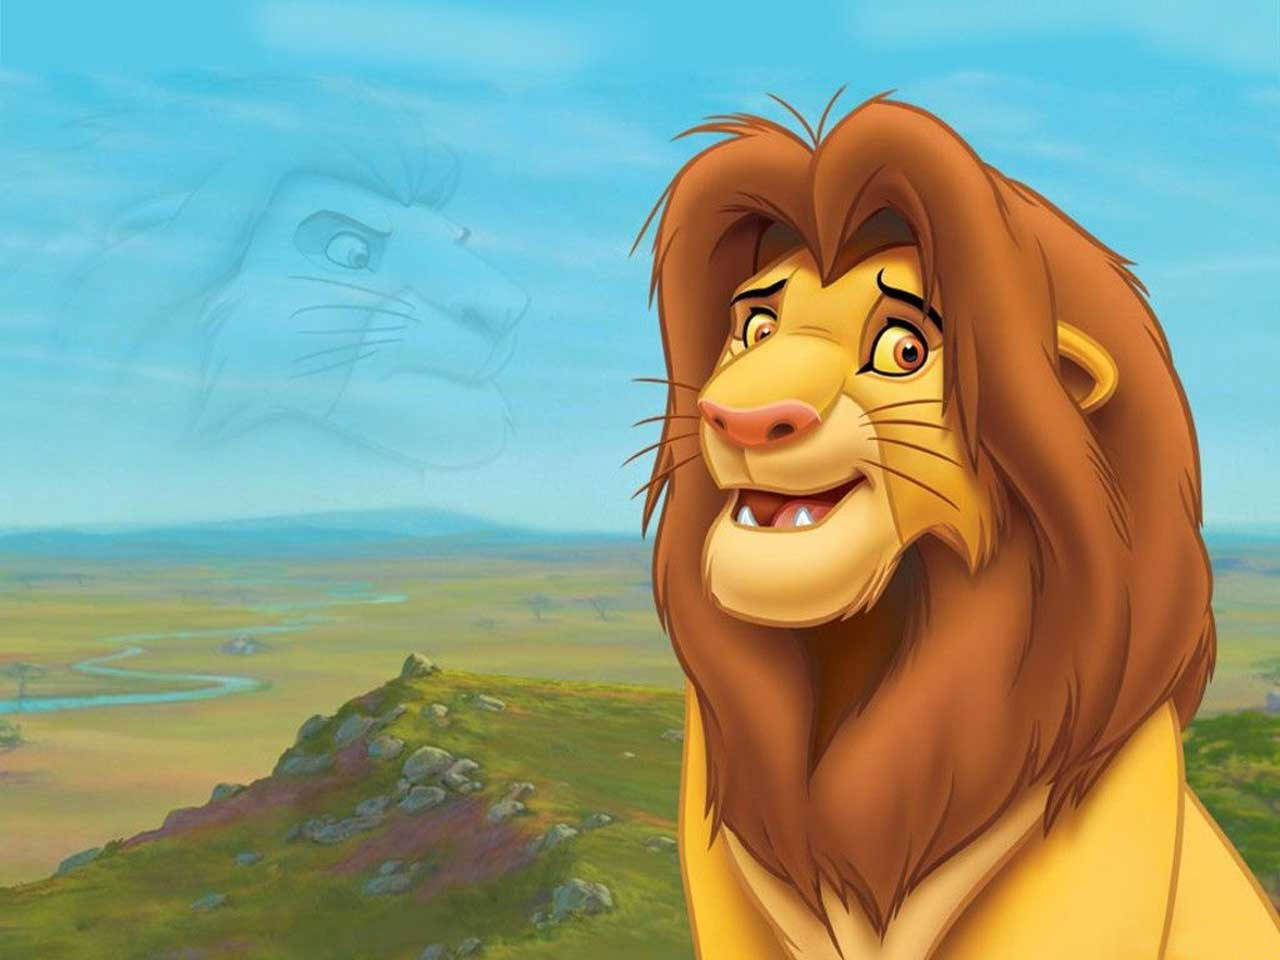 Free Lion King Wallpaper Downloads, [200+] Lion King Wallpapers for FREE |  